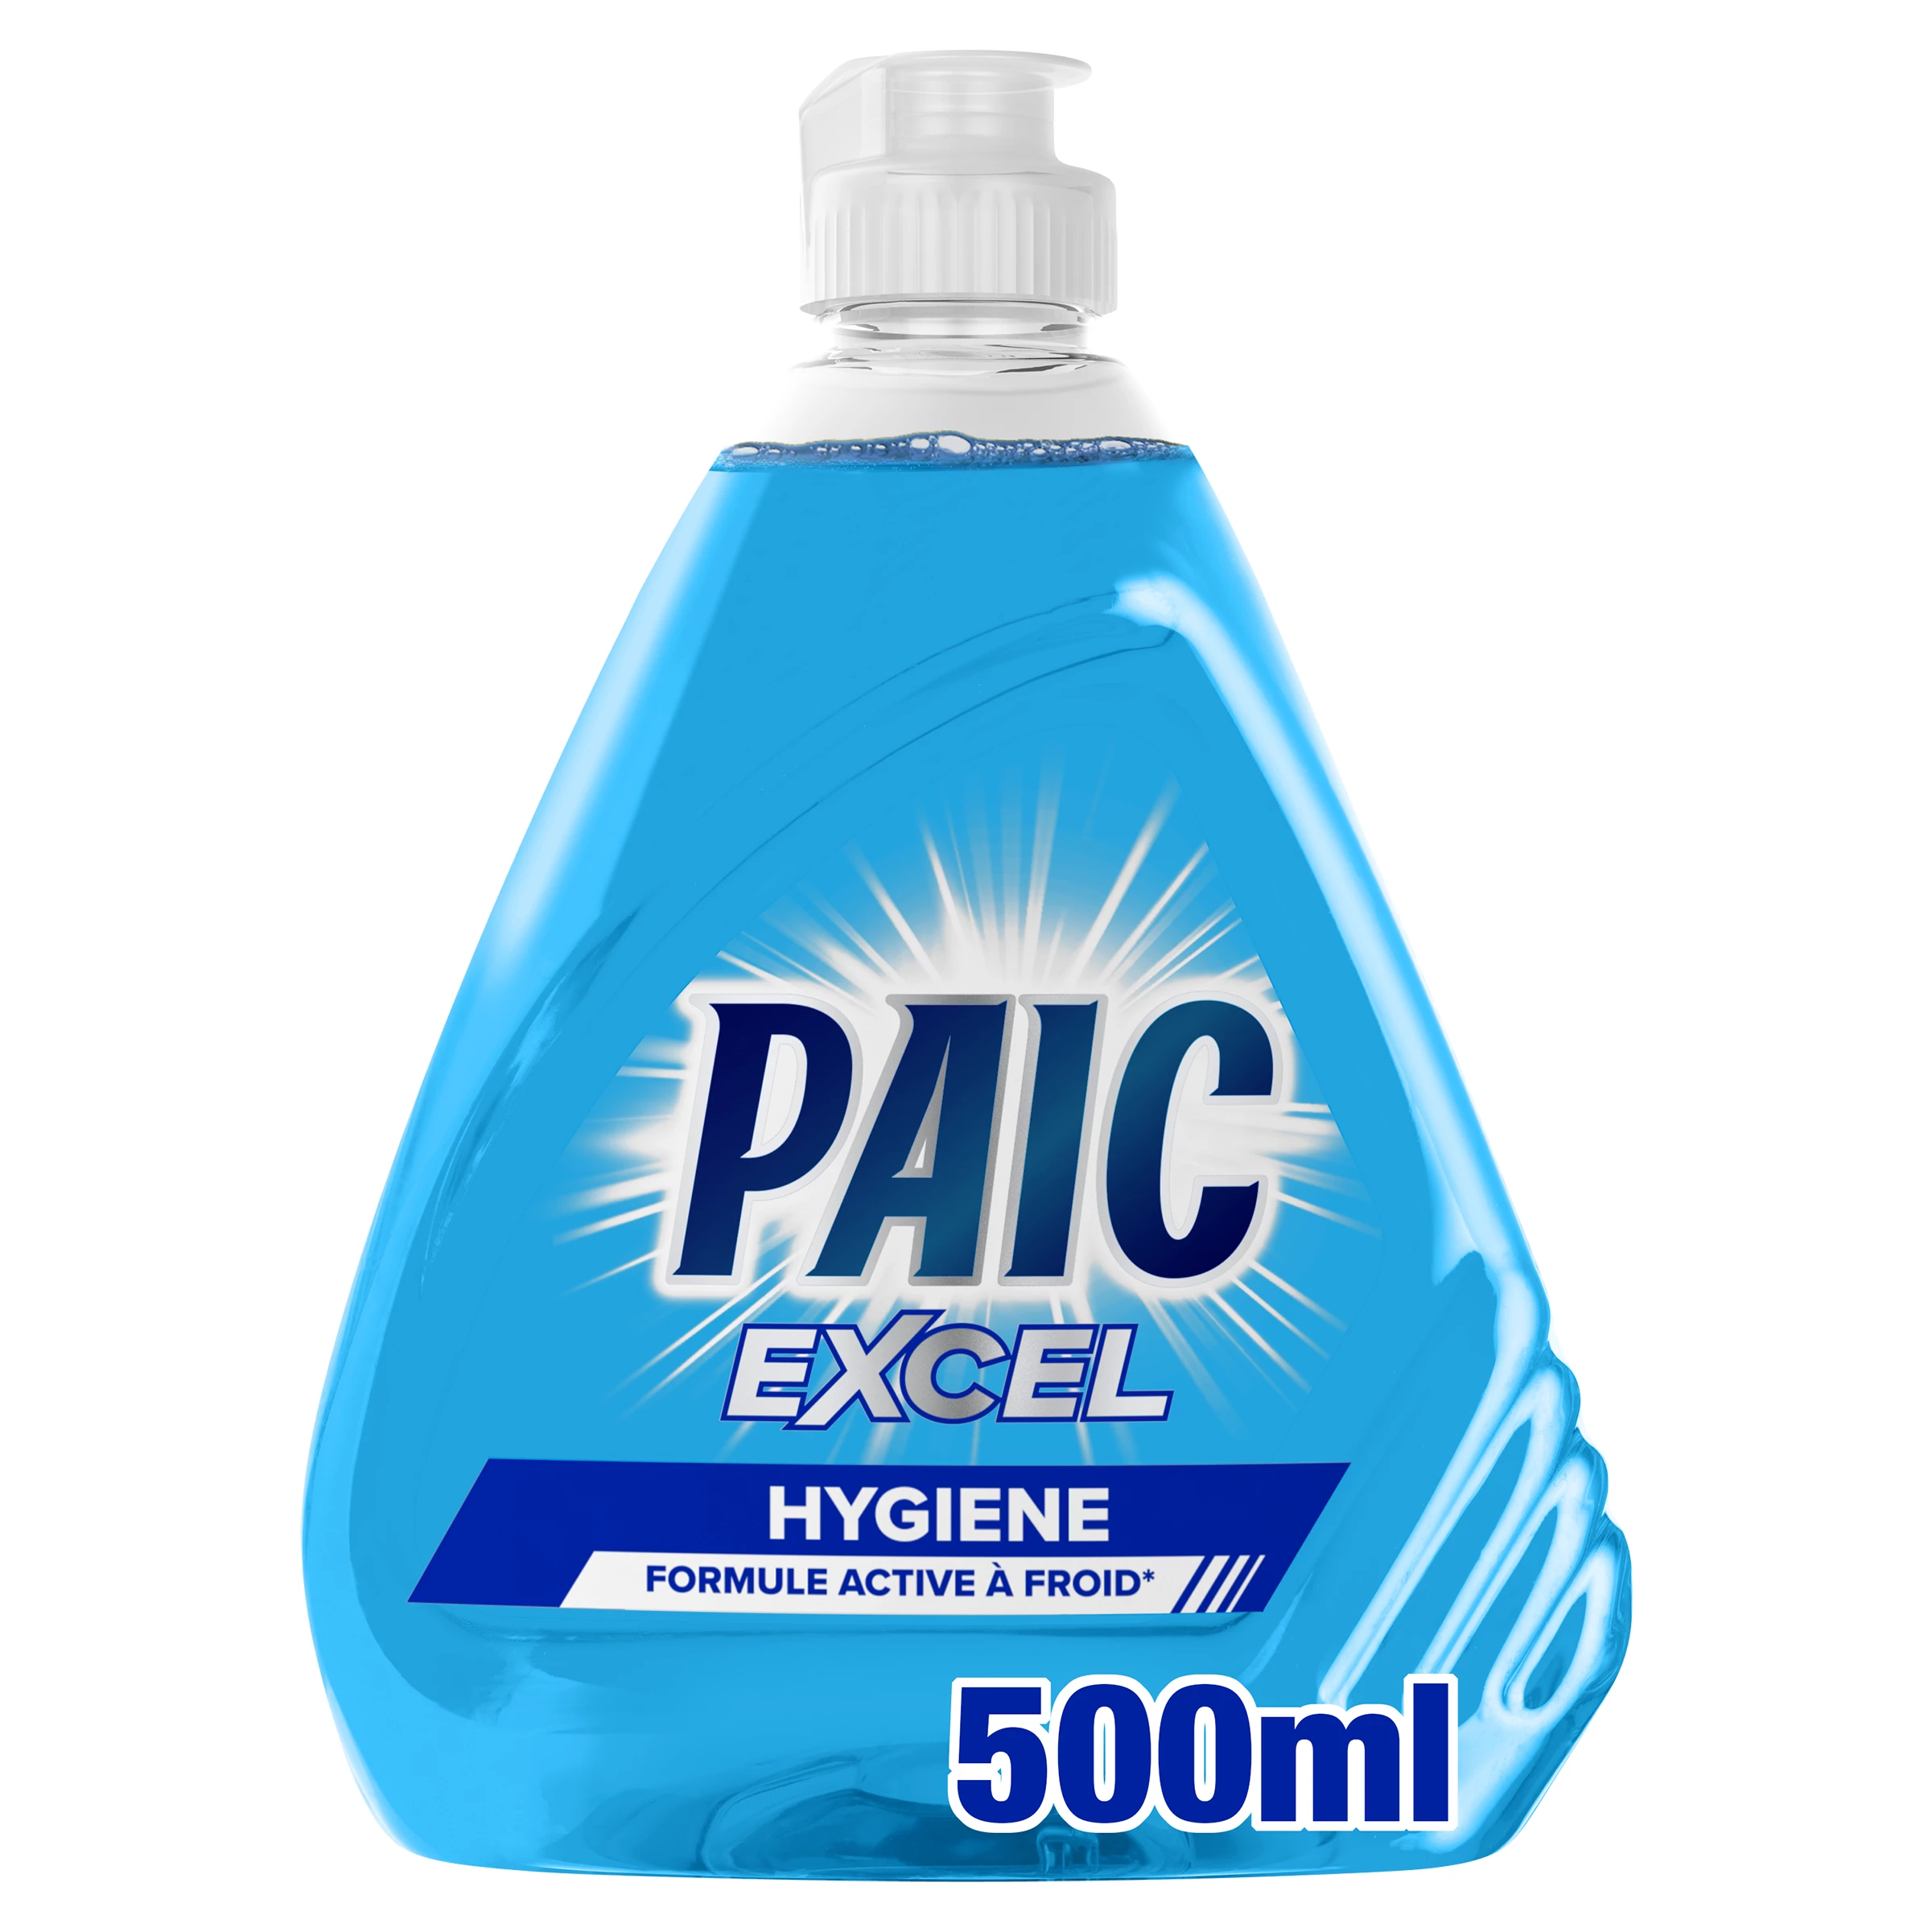 Paic Ultra Fraich Hygiene 500m